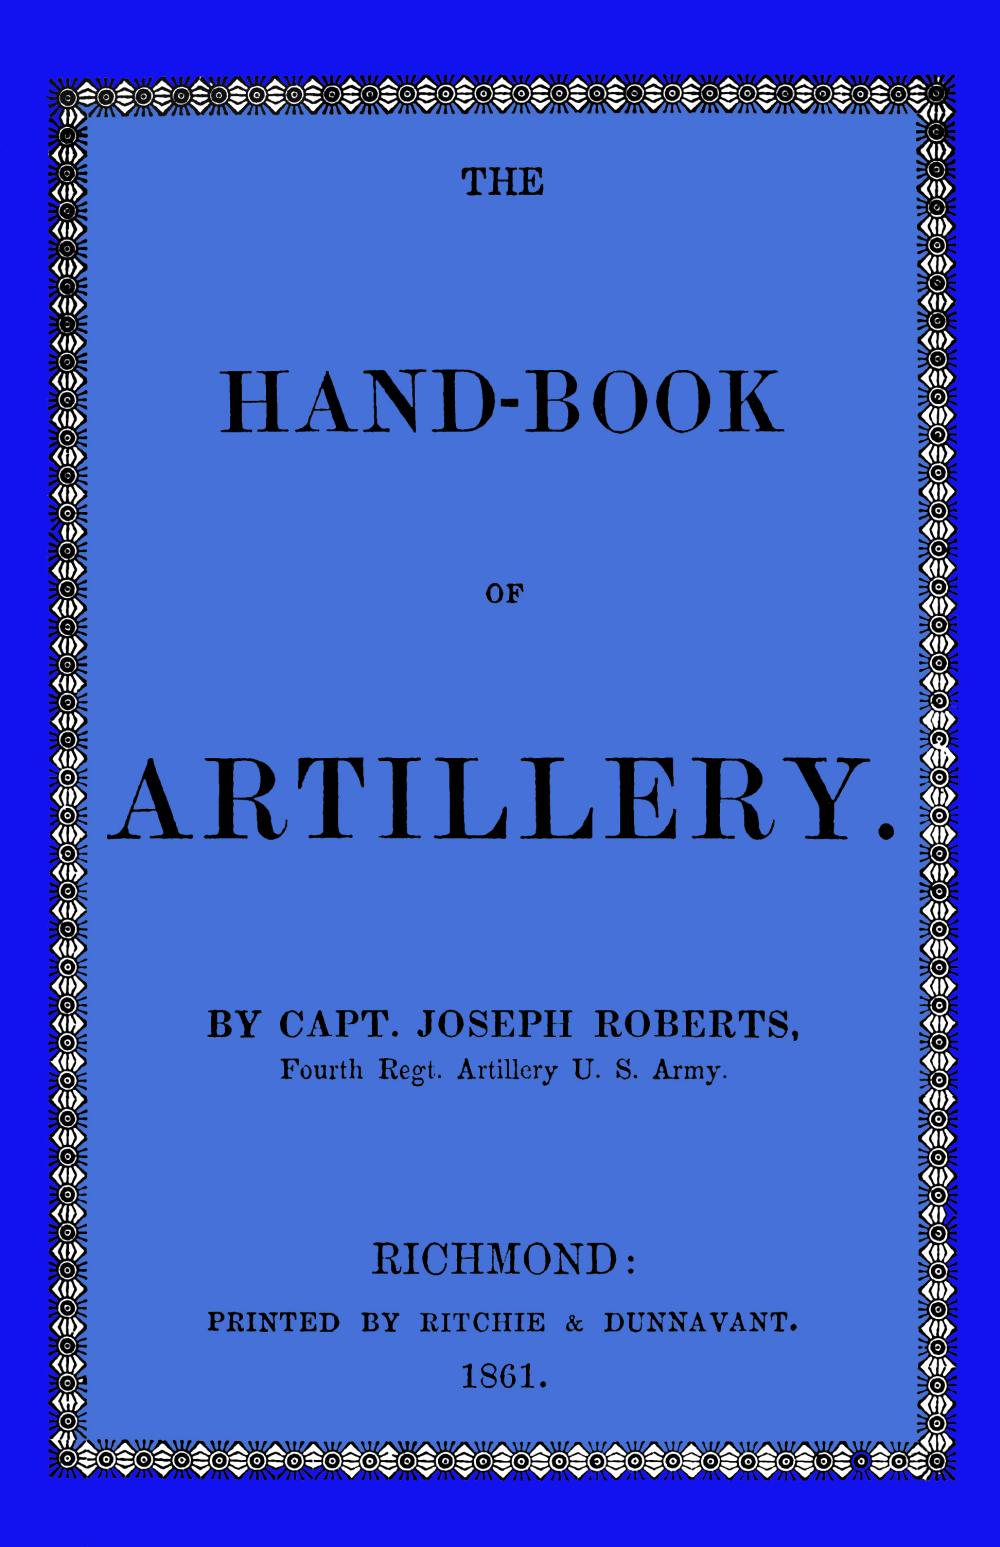 The hand-book of artillery